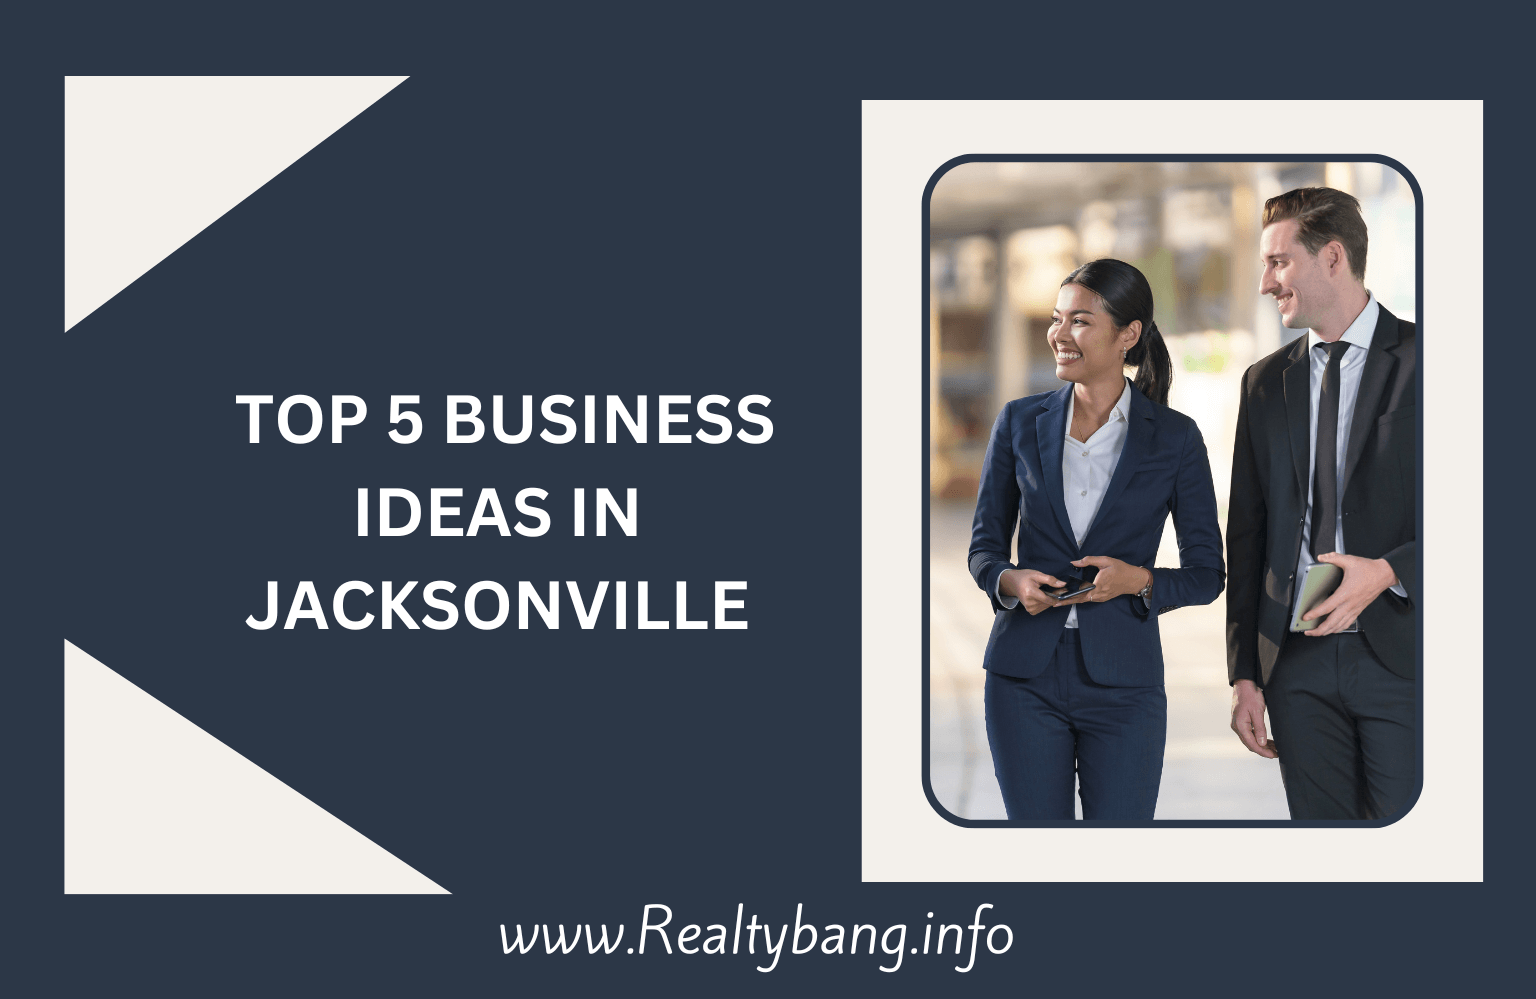 TOP 5 BUSINESS IDEAS IN JACKSONVILLE